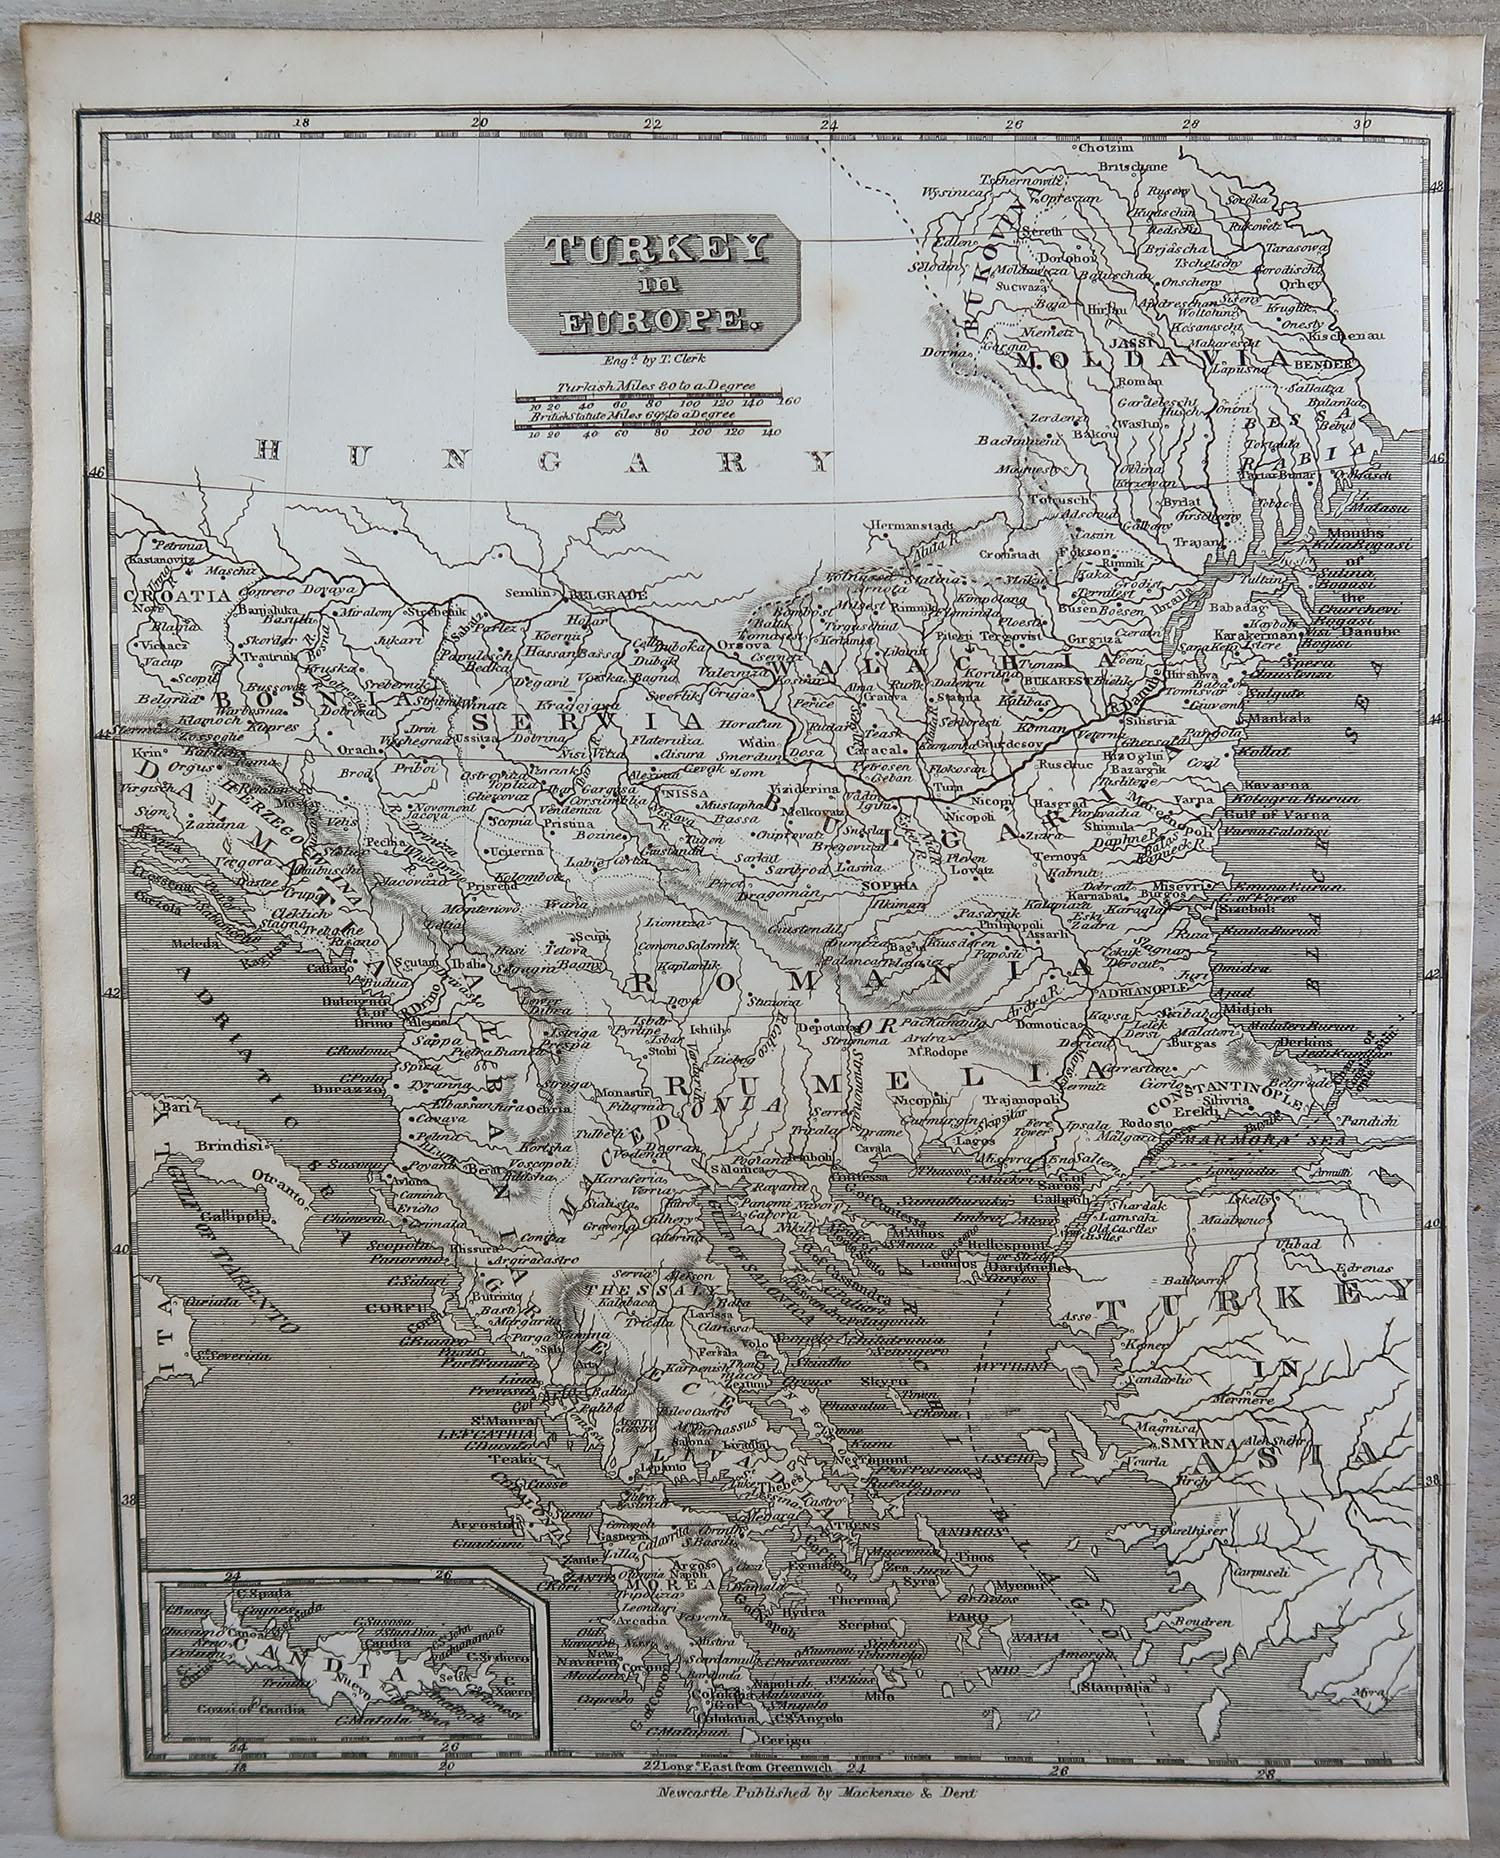 English Original Antique Map of Greece by Thomas Clerk, 1817